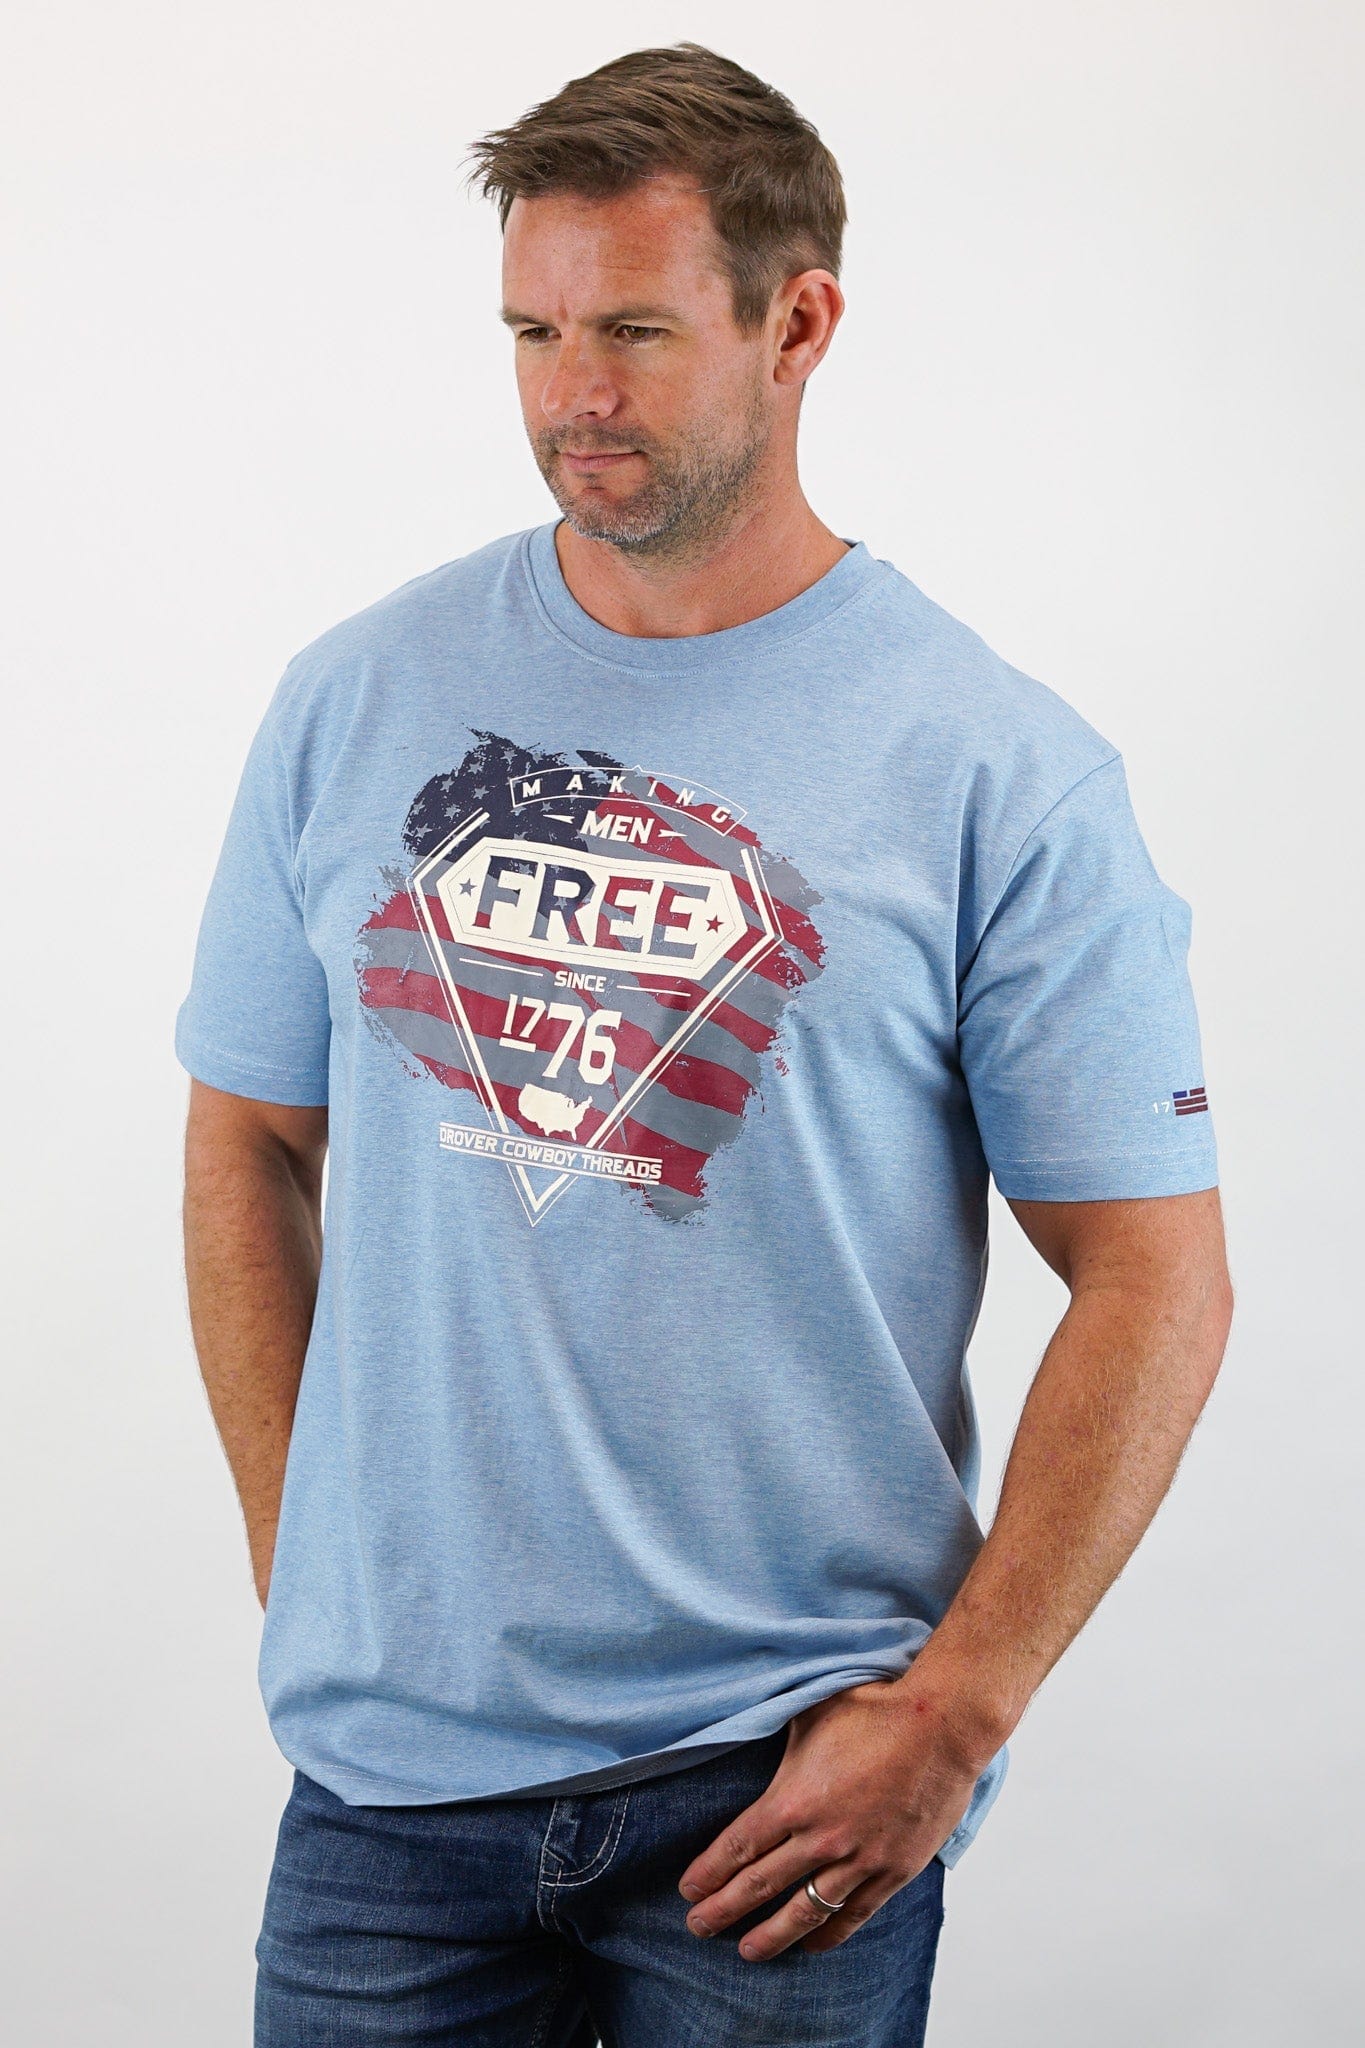 Drover Cowboy Threads Shirts T-Shirt - Making Men Free Since 1776 - Heathered Light Blue